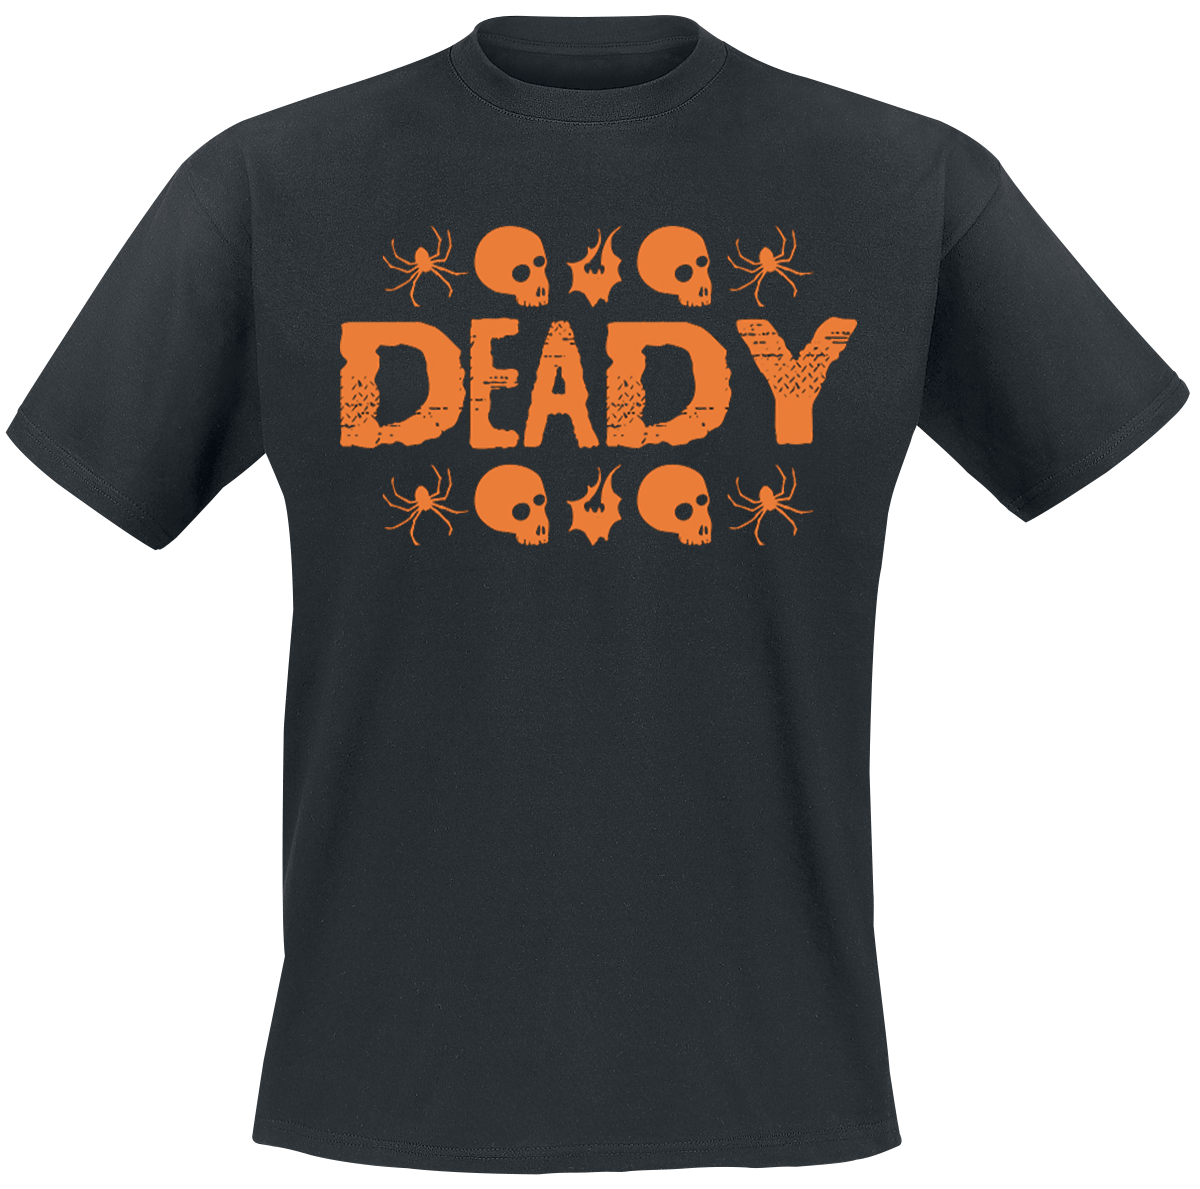 Deady -  - T-Shirt - black image